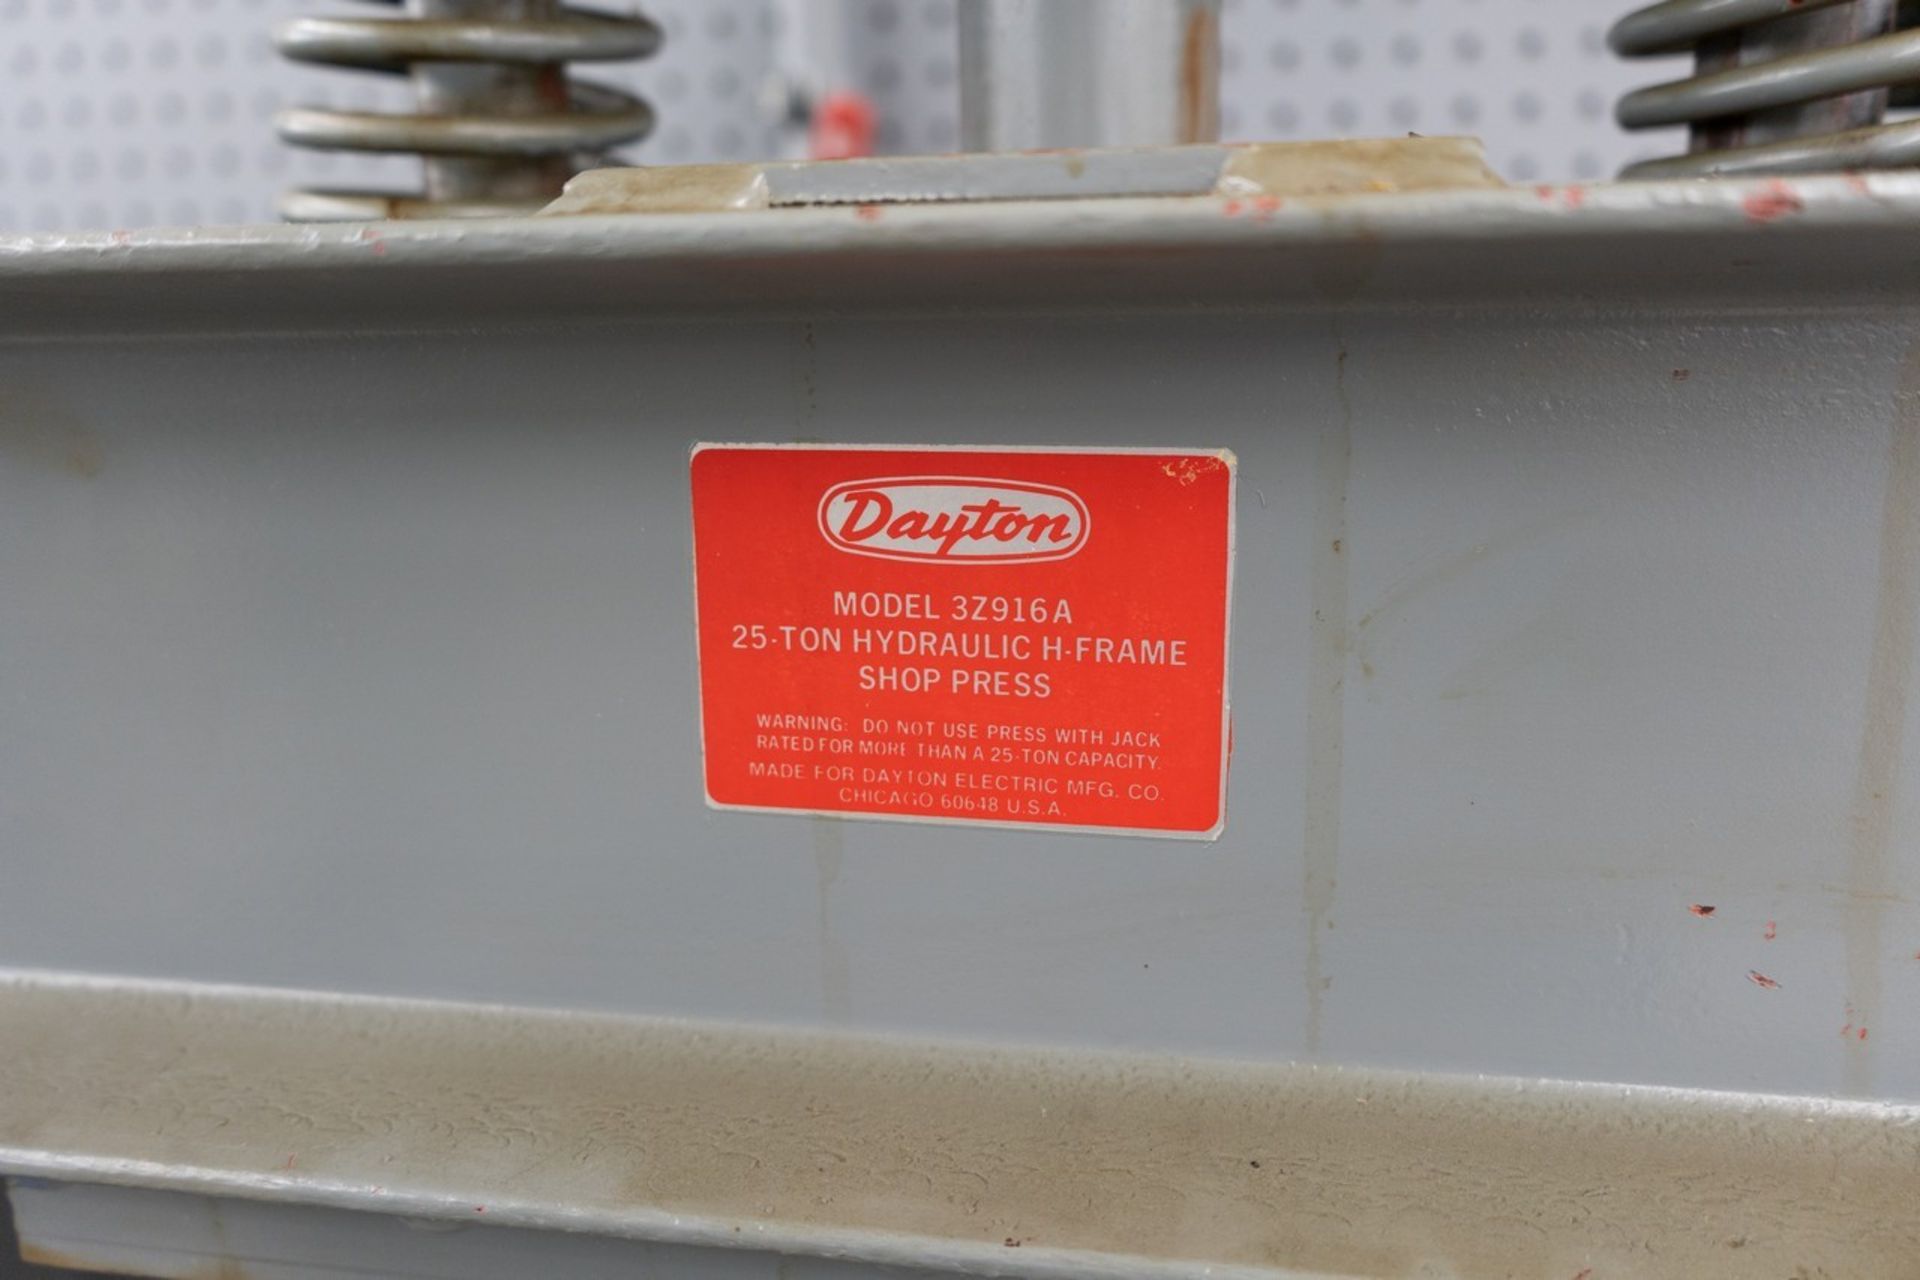 Dayton 20-Ton Hydraulic H-Frame Shop Press - Image 2 of 2